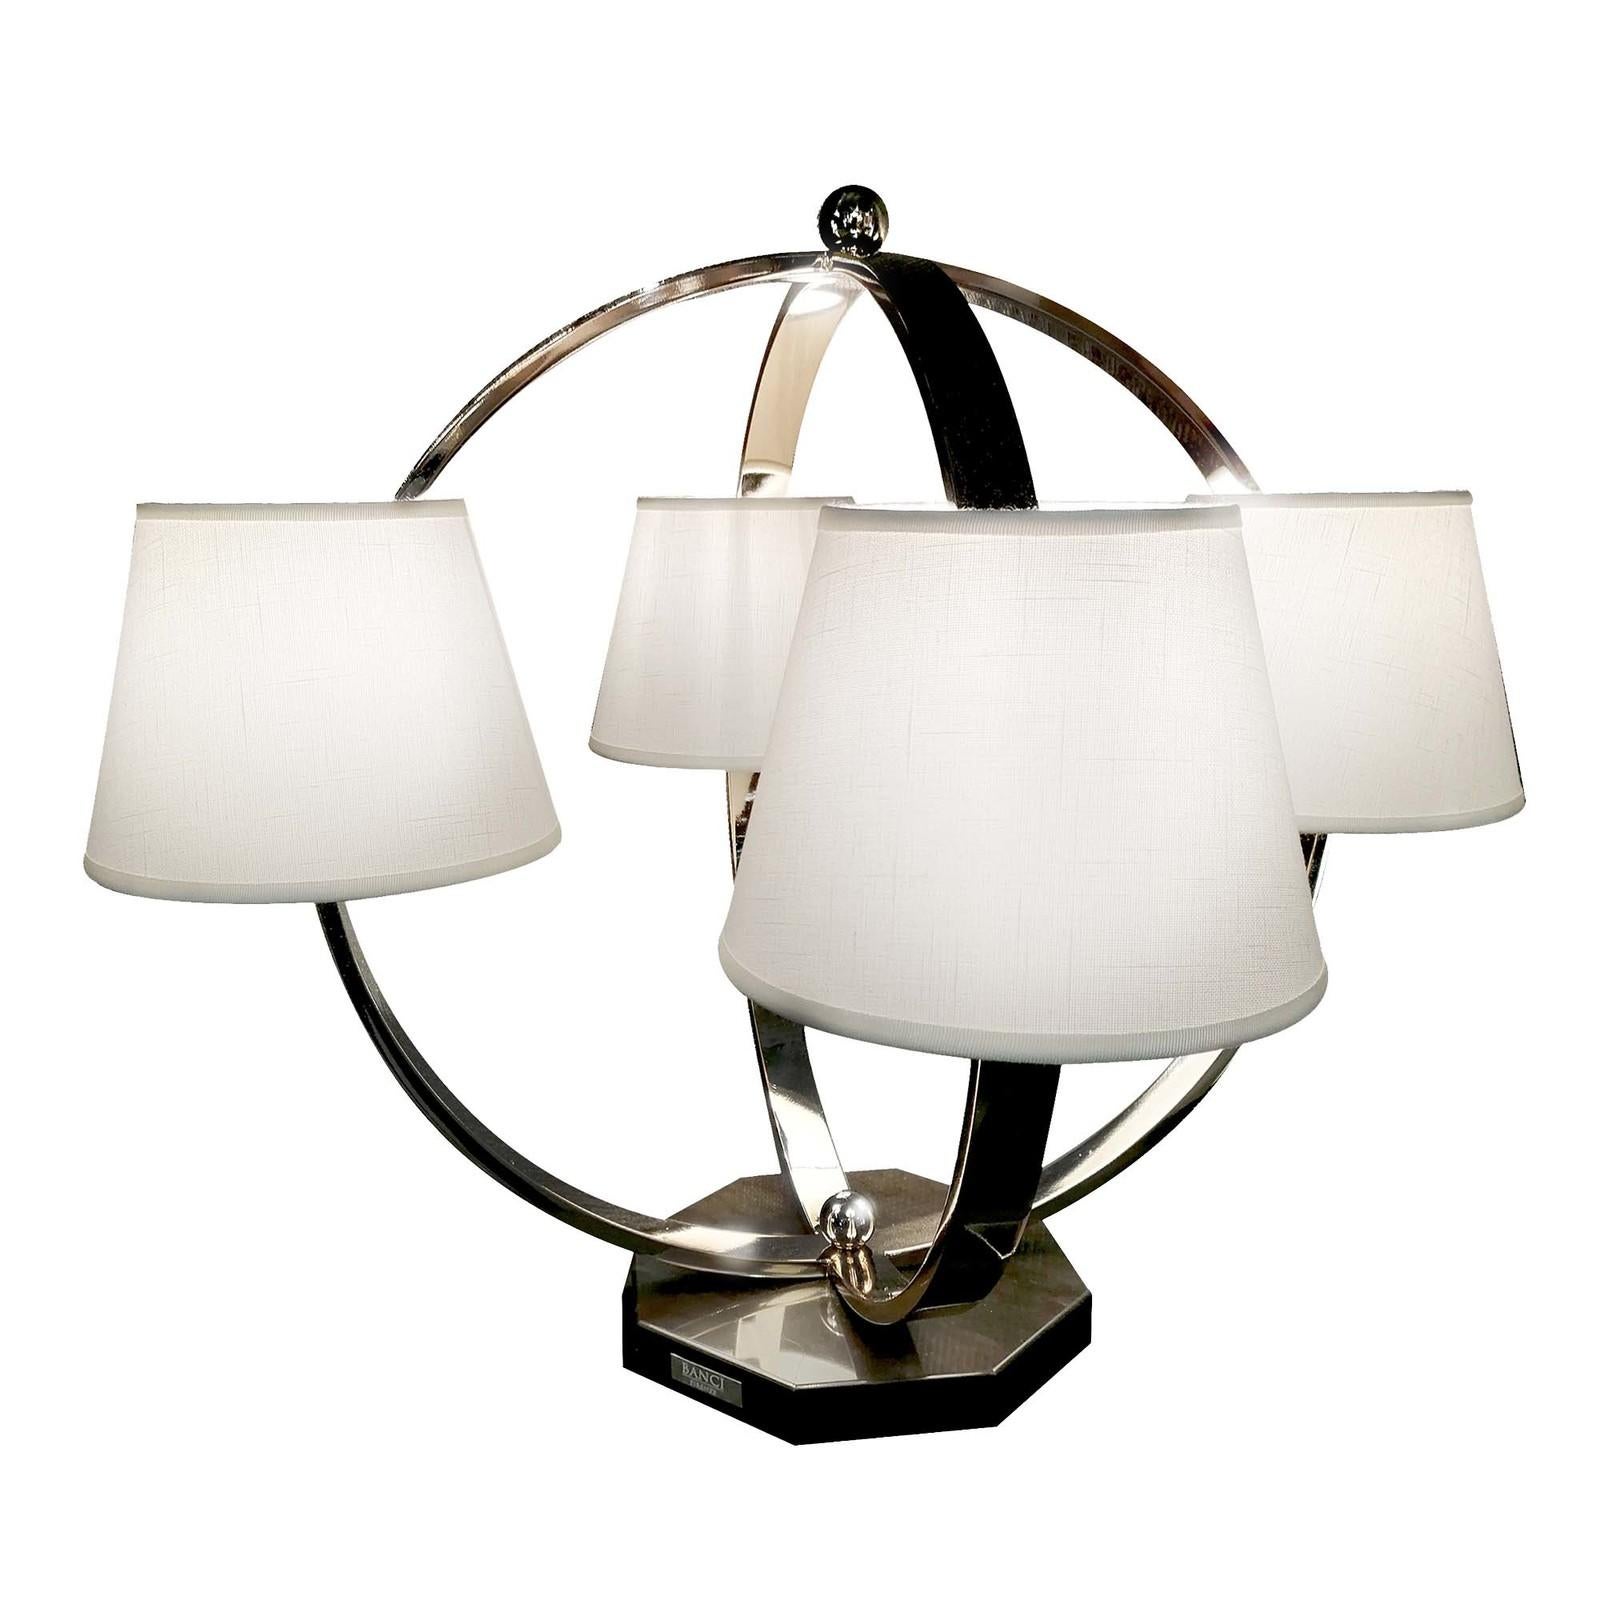 Open circle 4-light table lamp.